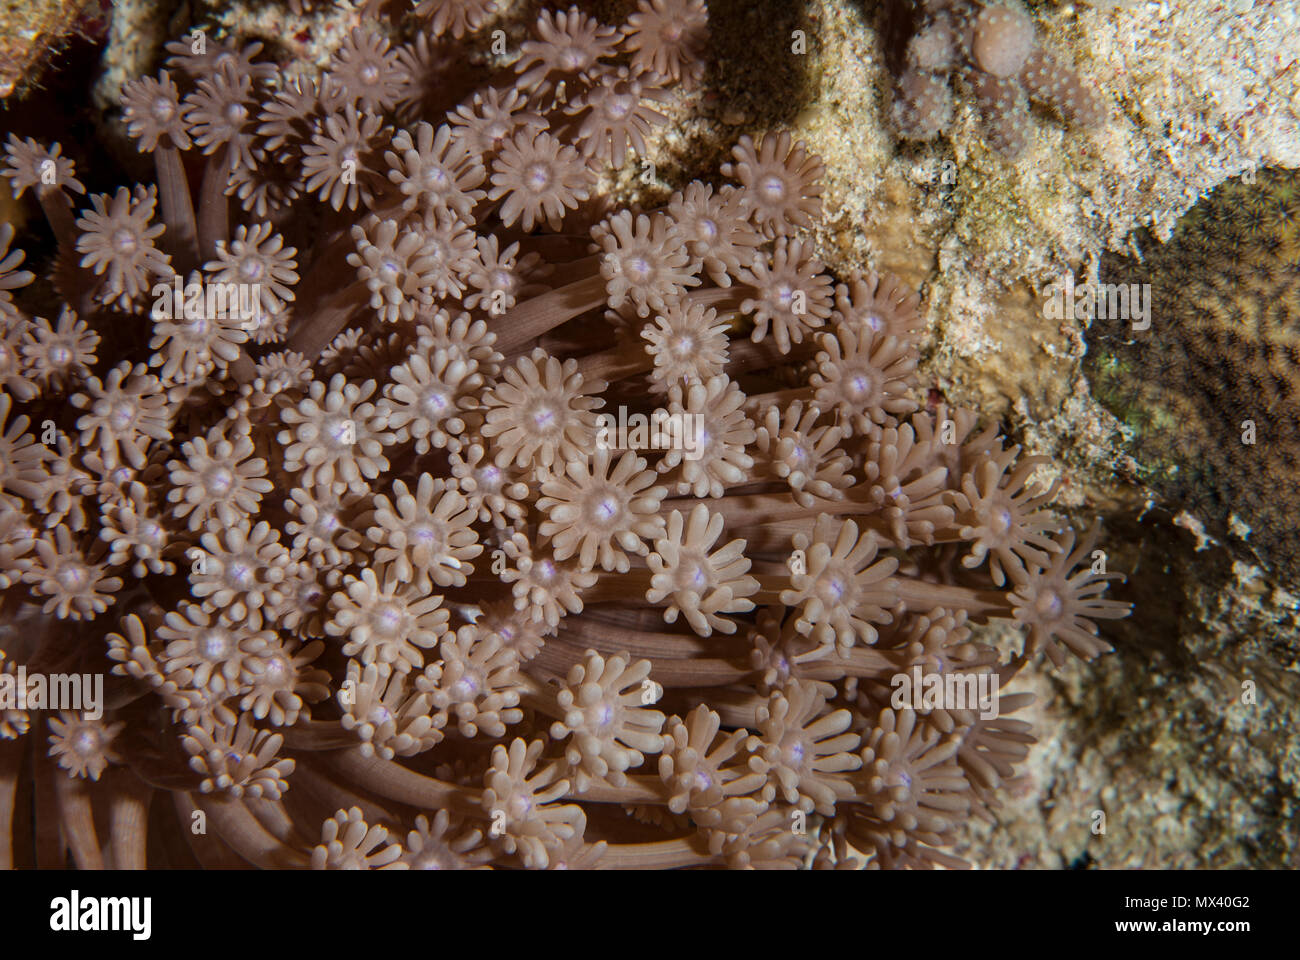 Anemone coral, Goniopora columna, Poritidae, Sharm el-Sheik, Red Sea. Egypt Stock Photo